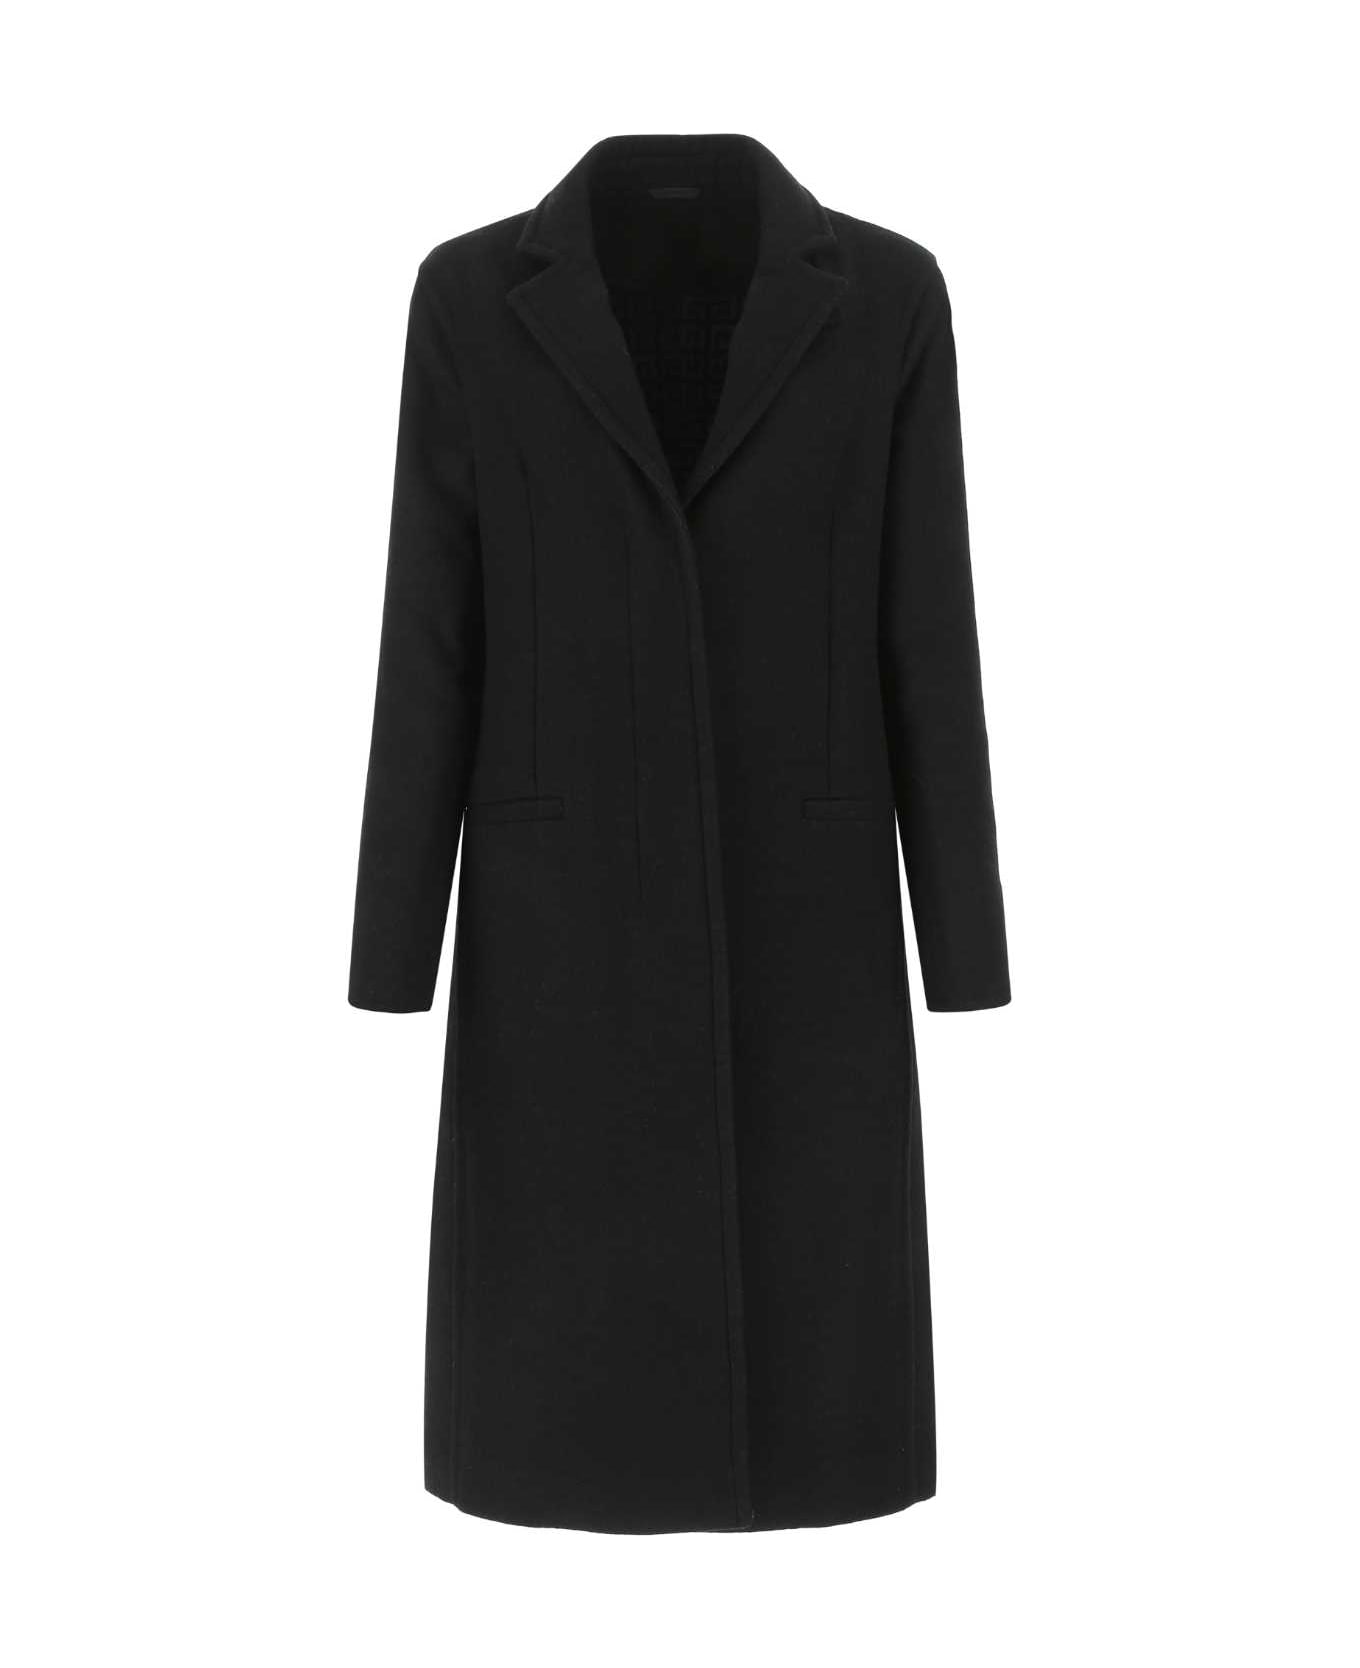 Givenchy Black Wool Blend Coat - 002 コート